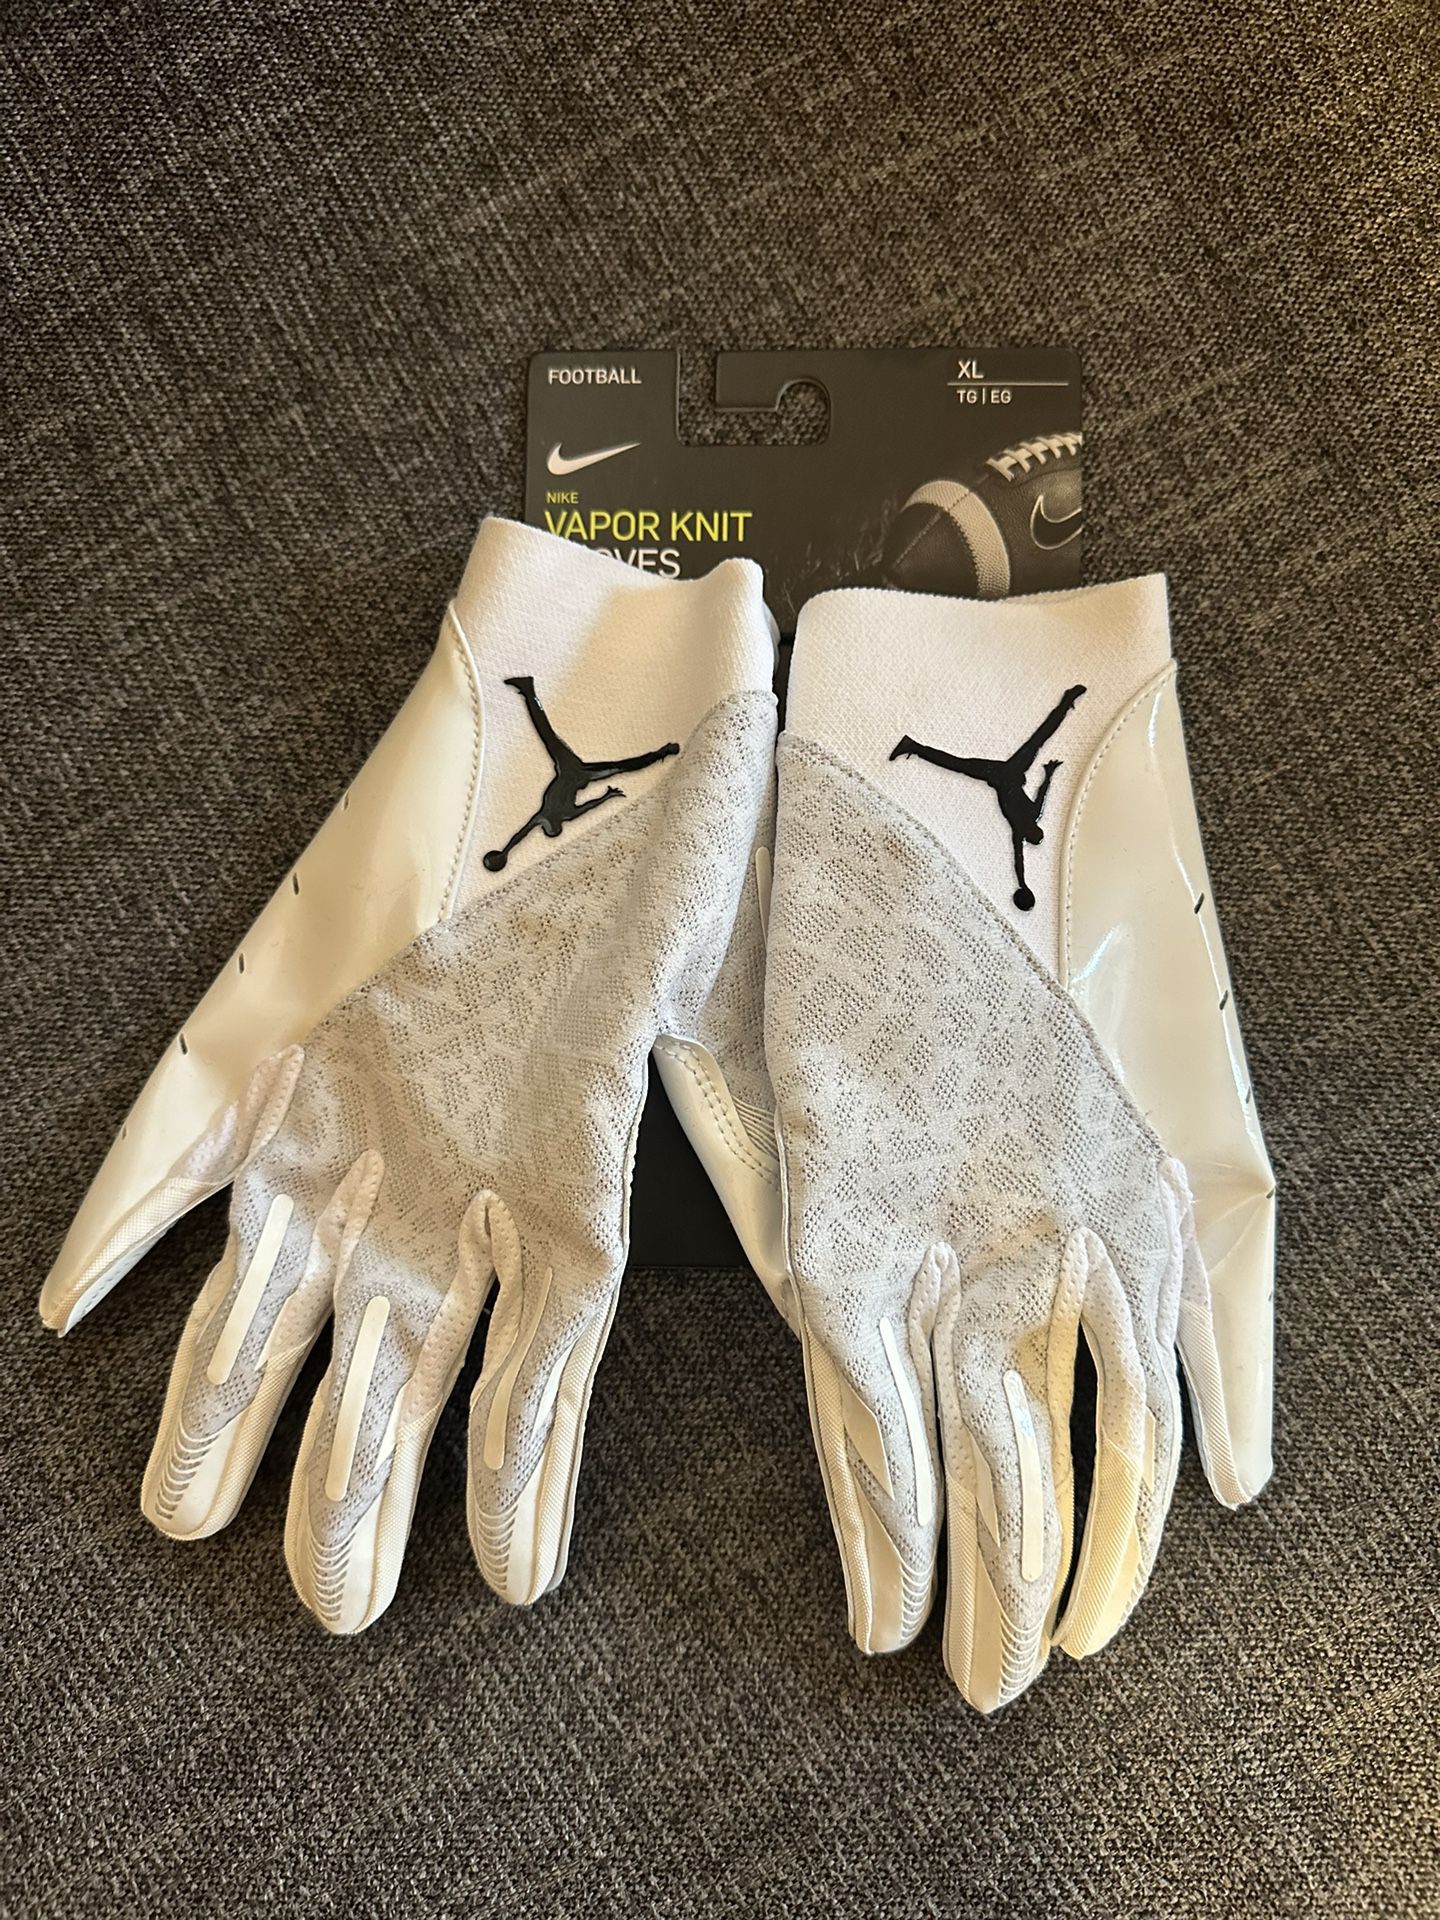 Brand new Men’s Jordan Vapor Knit Football Gloves size XL 